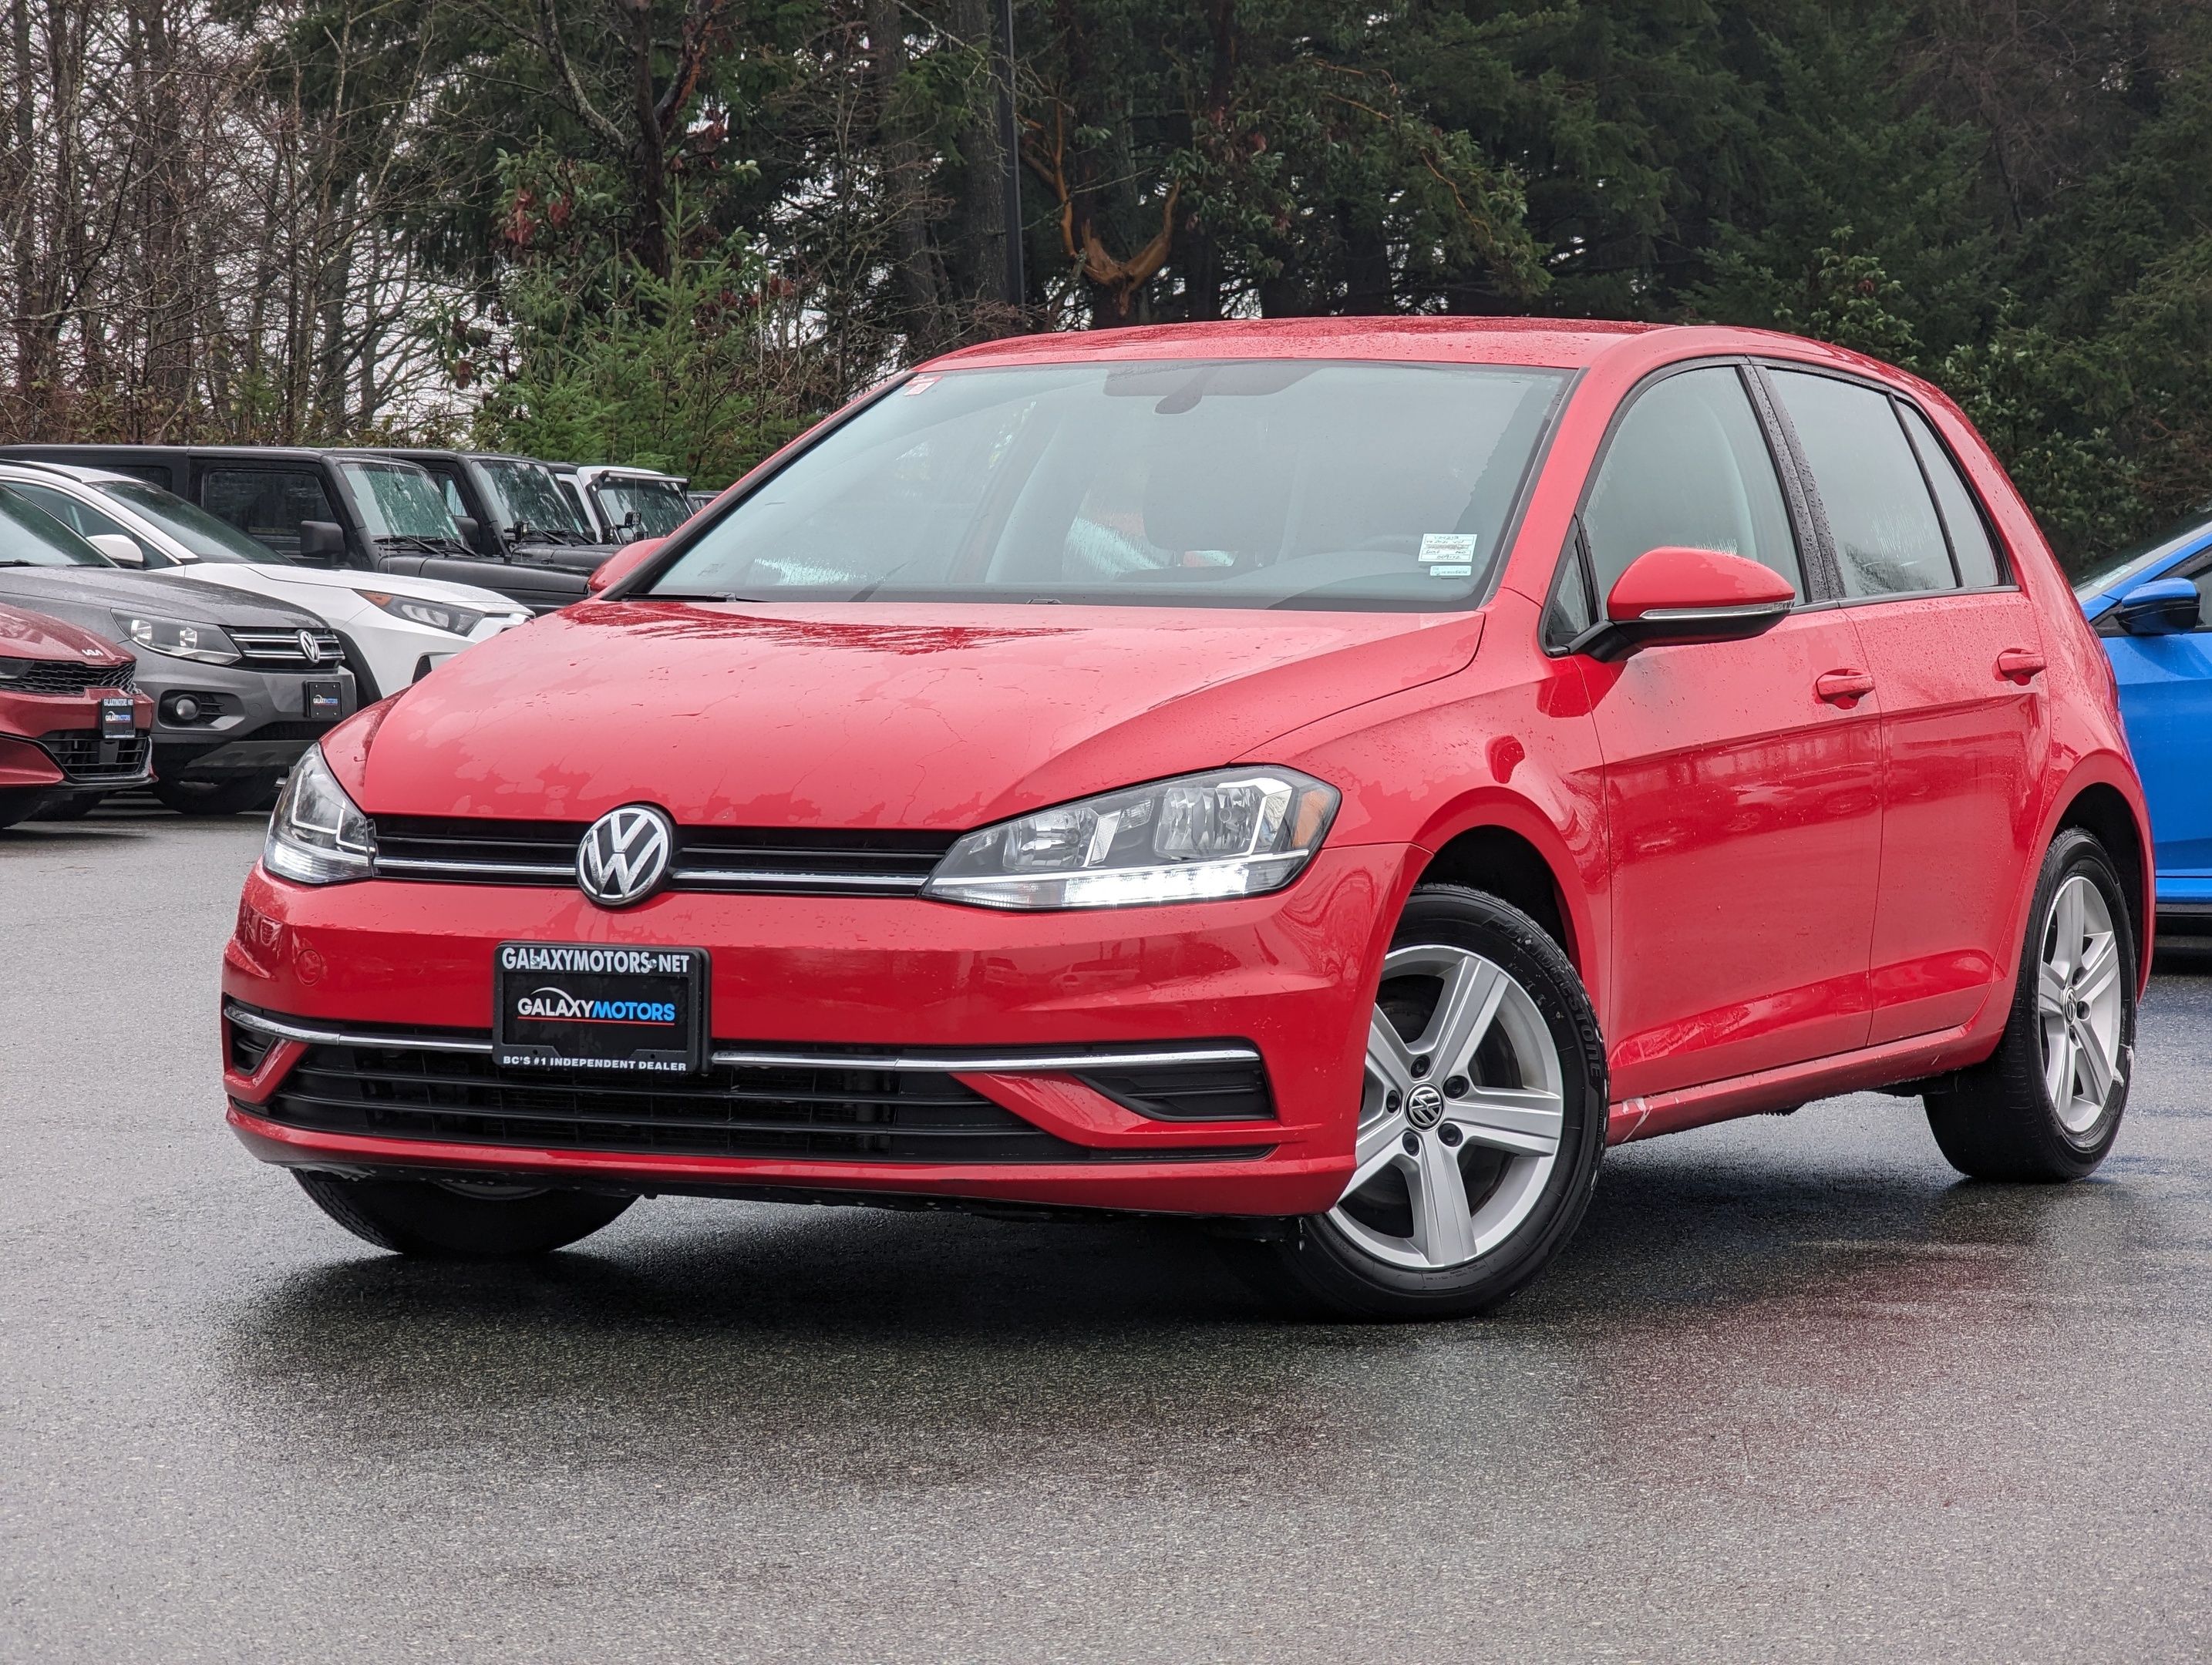 2021 Volkswagen Golf - No Accidents, Navigation, Heated Seats